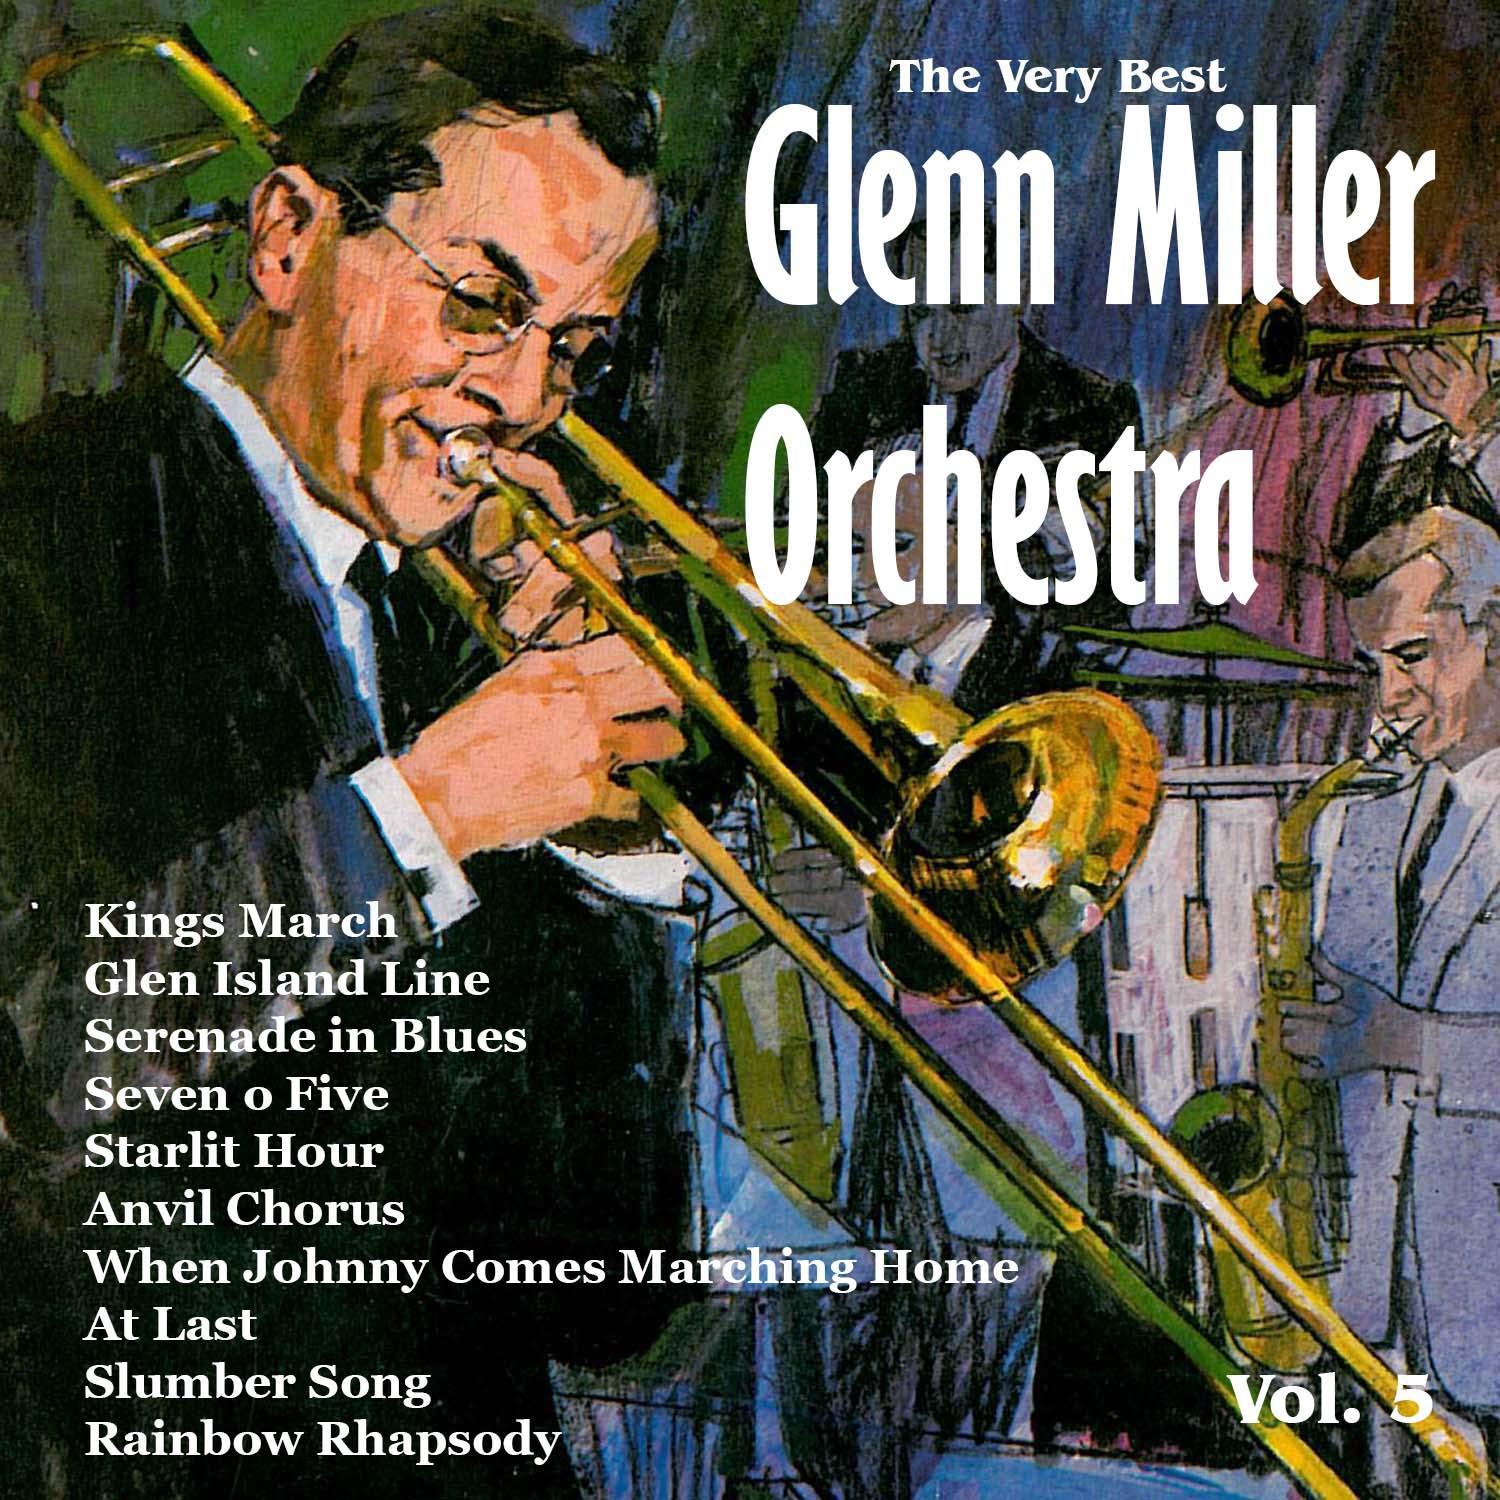 The Very Best: Glenn Miller Orchestra Vol. 5